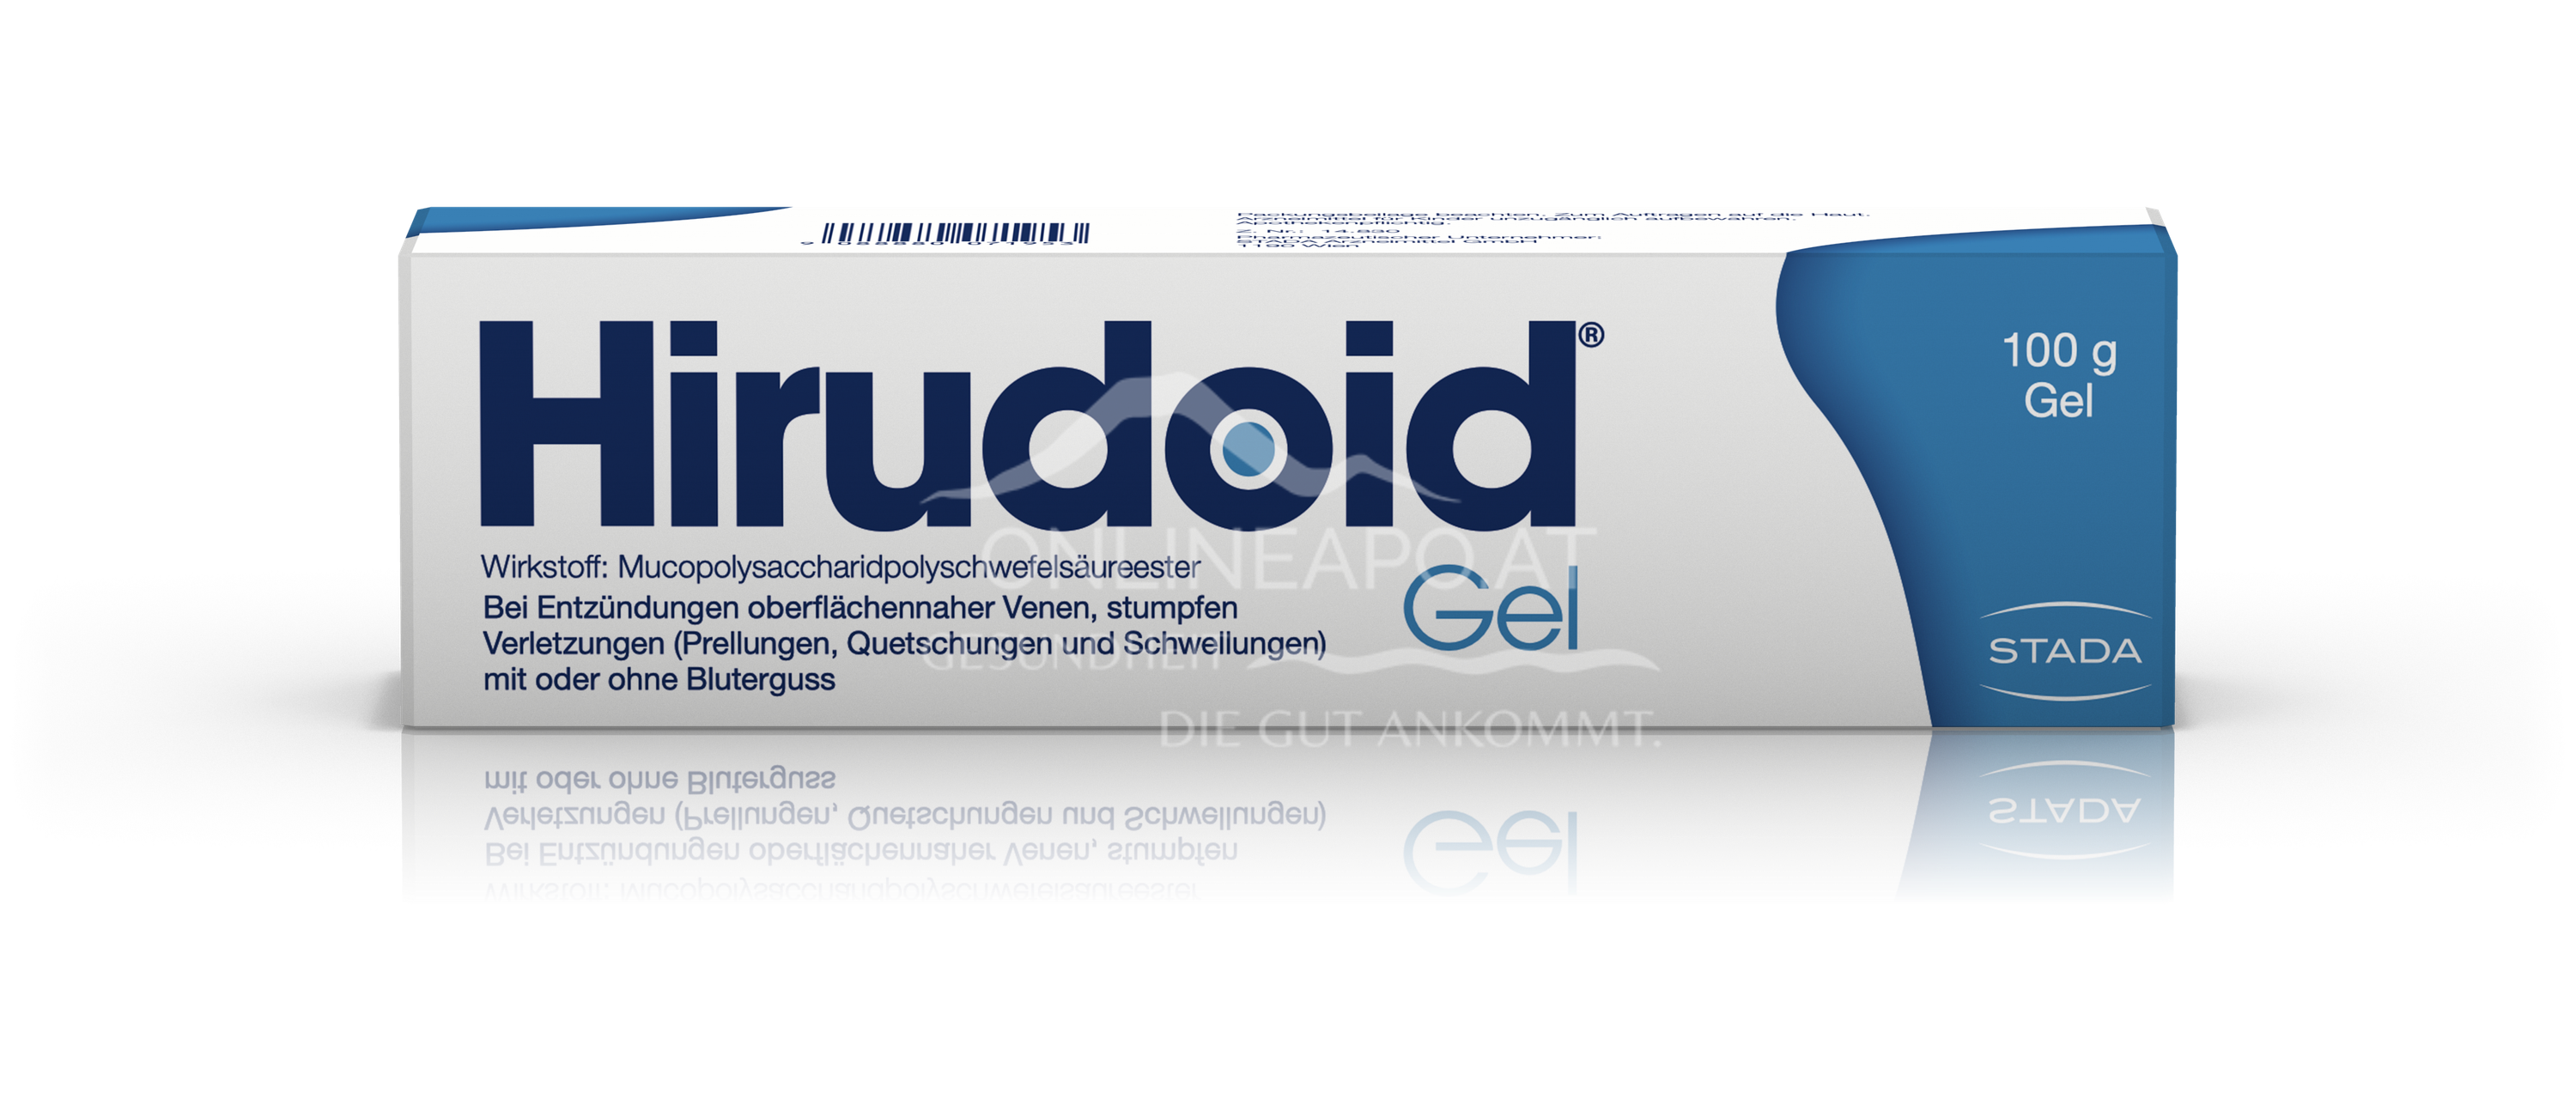 Hirudoid Gel